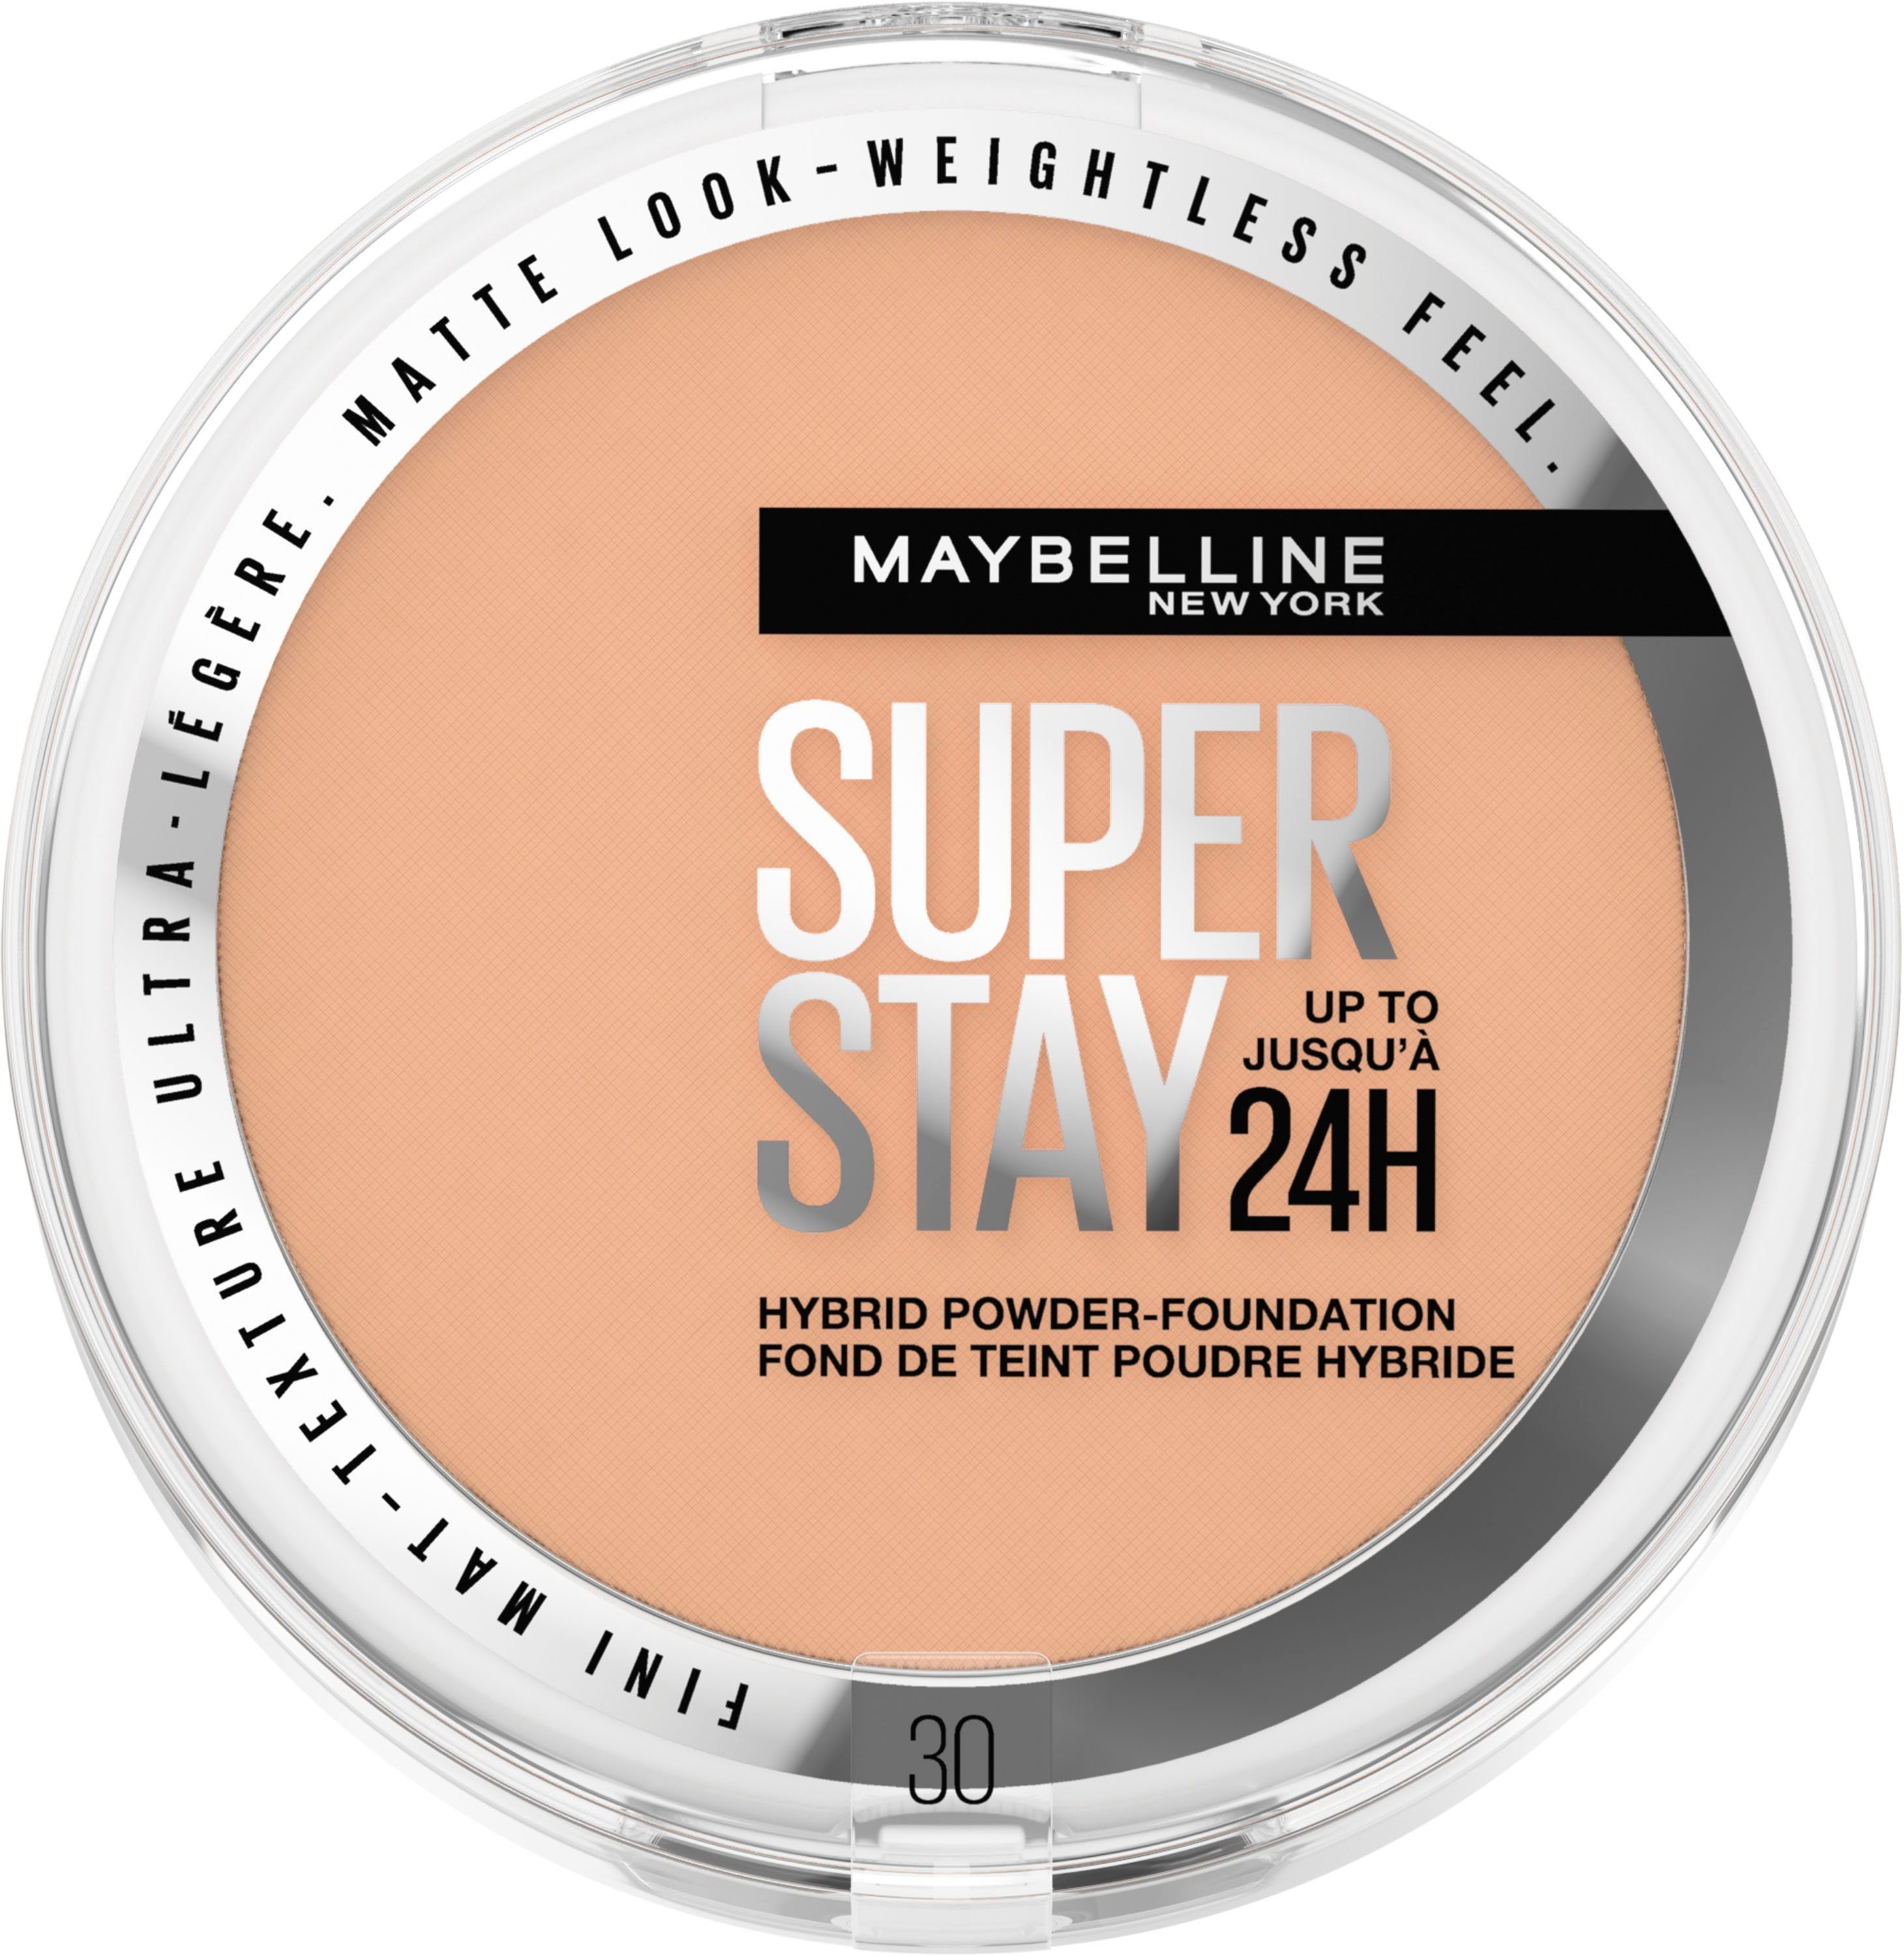 Neuankömmling MAYBELLINE NEW YORK Foundation Maybelline Make-Up Stay Super York Puder New Hybrides